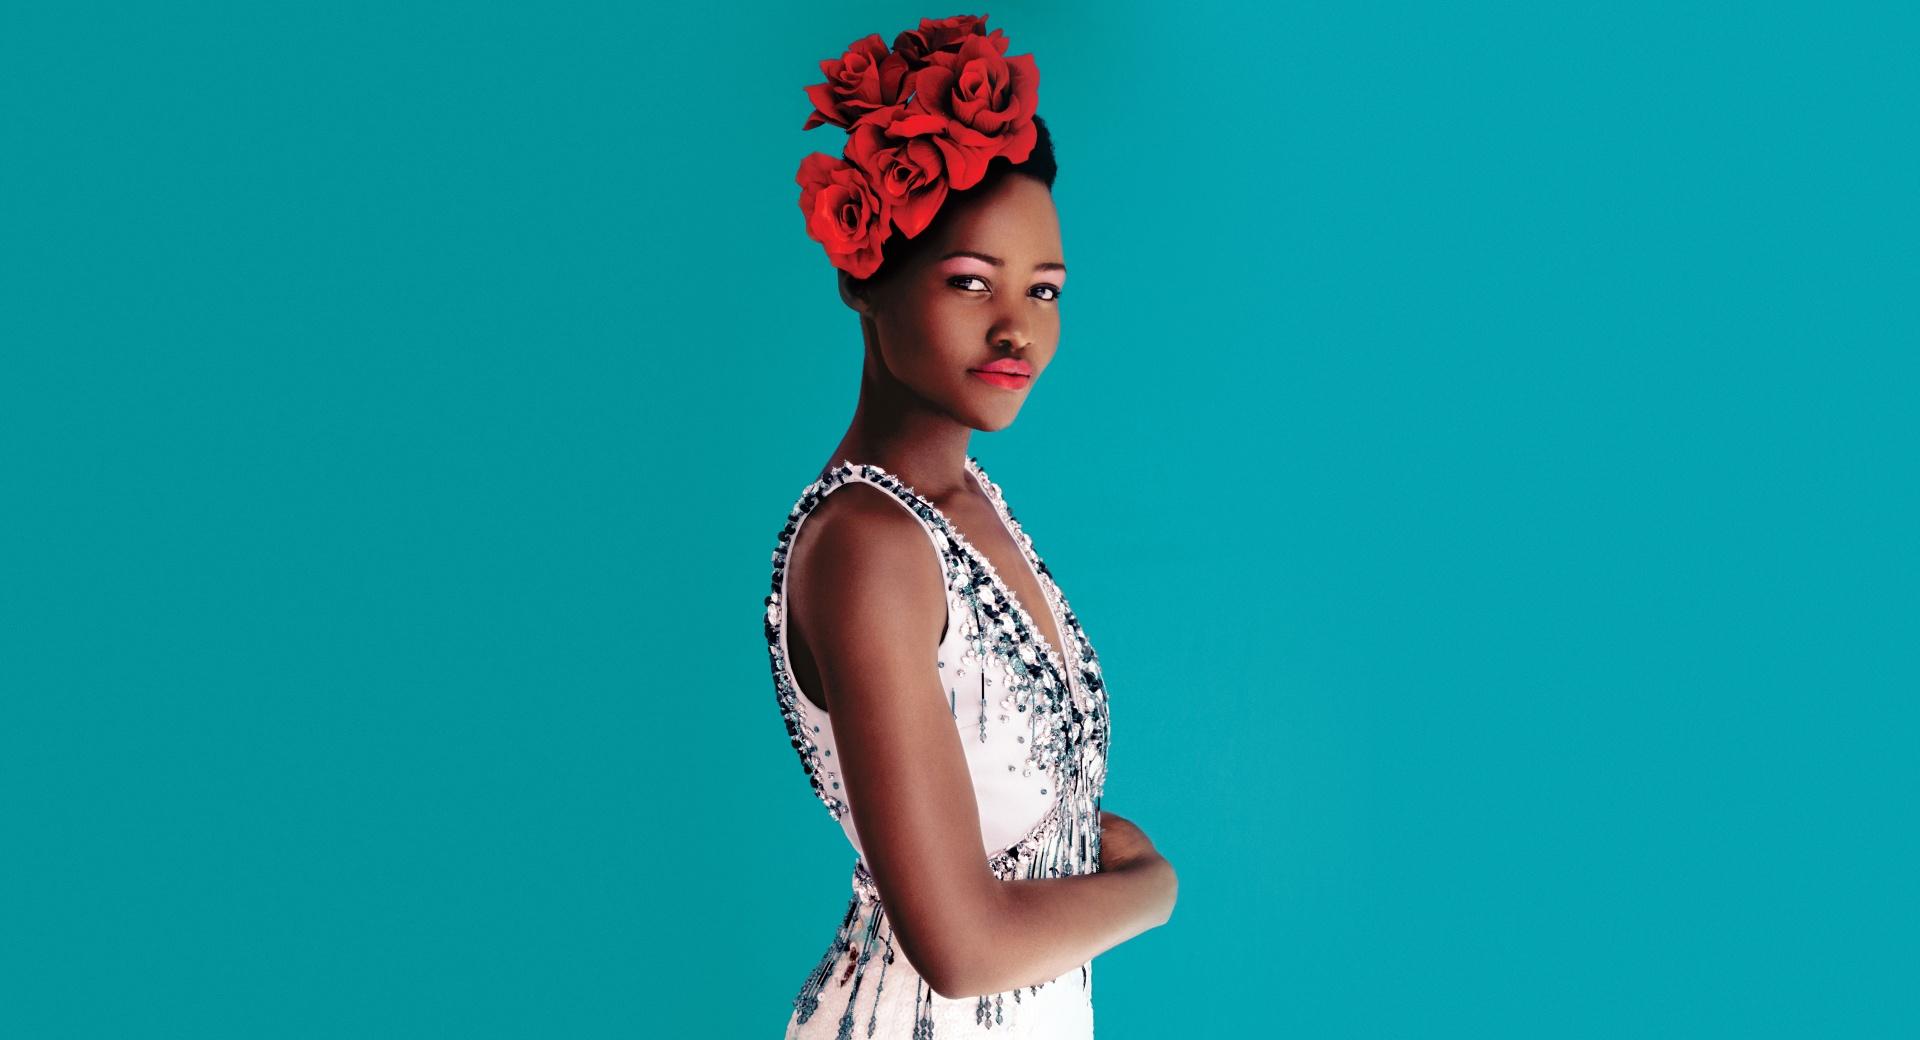 Lupita Nyongo Dress at 640 x 1136 iPhone 5 size wallpapers HD quality